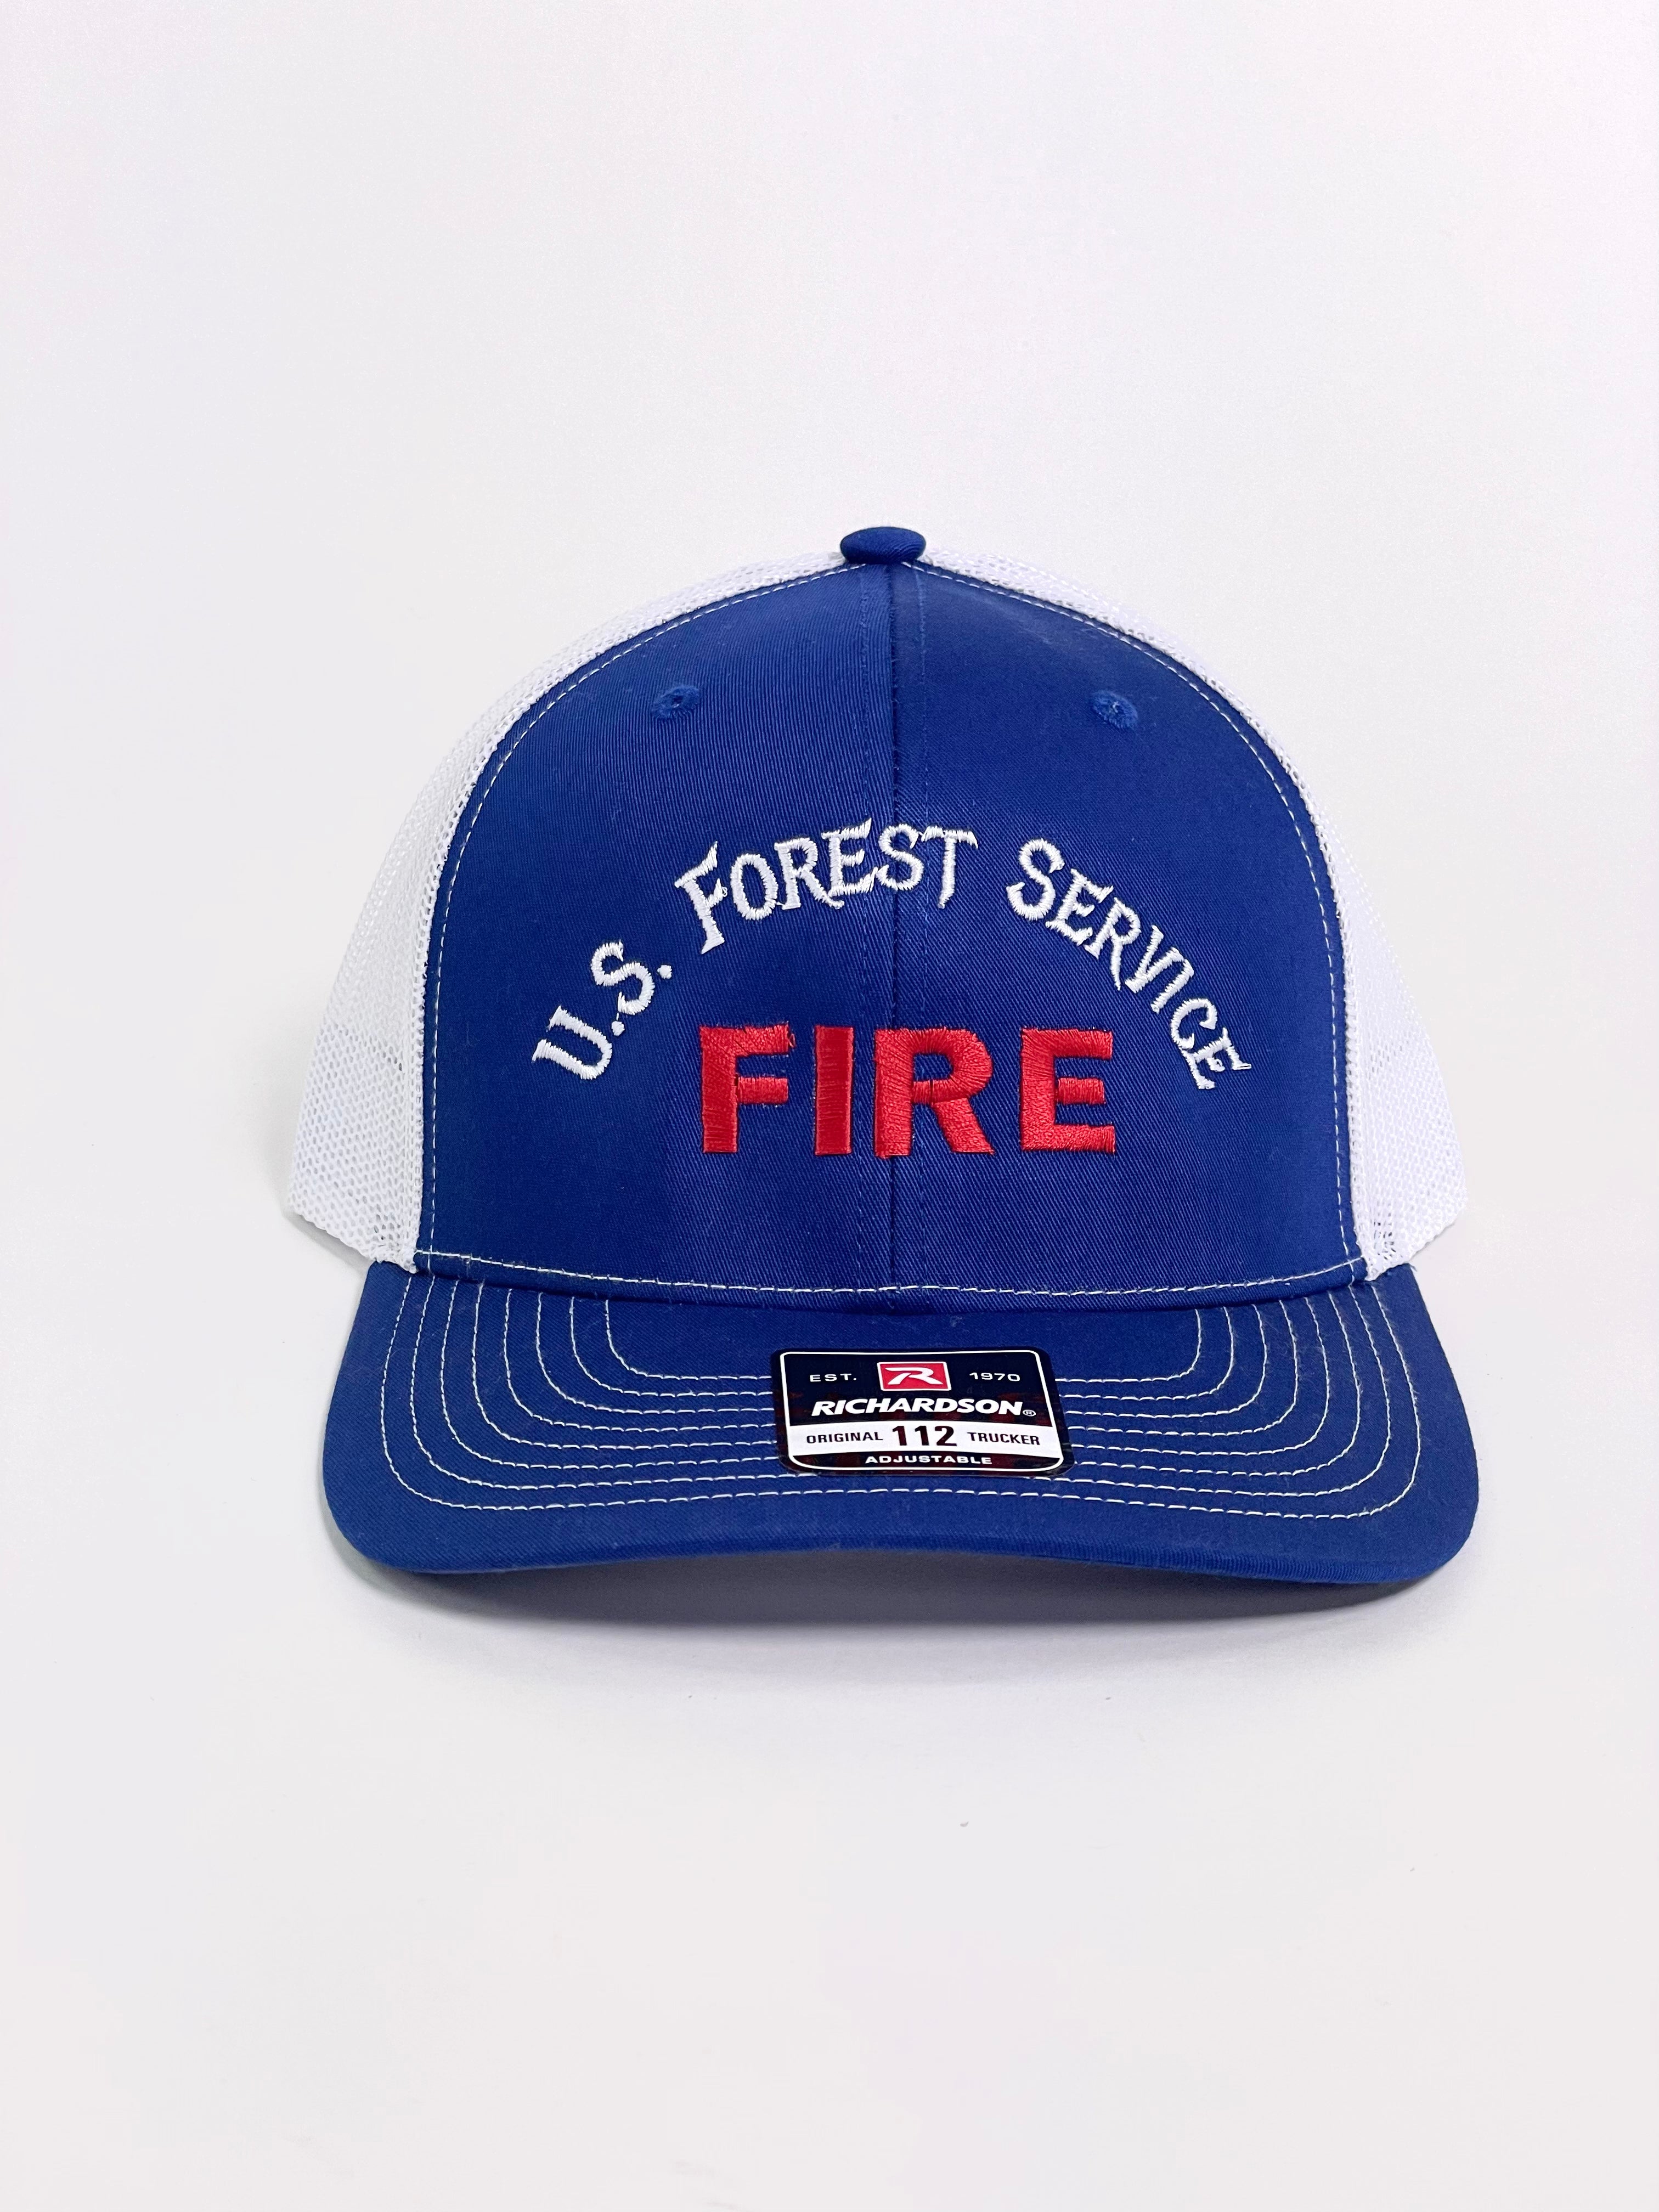 USFS FIRE HAT ROYAL/WHITE